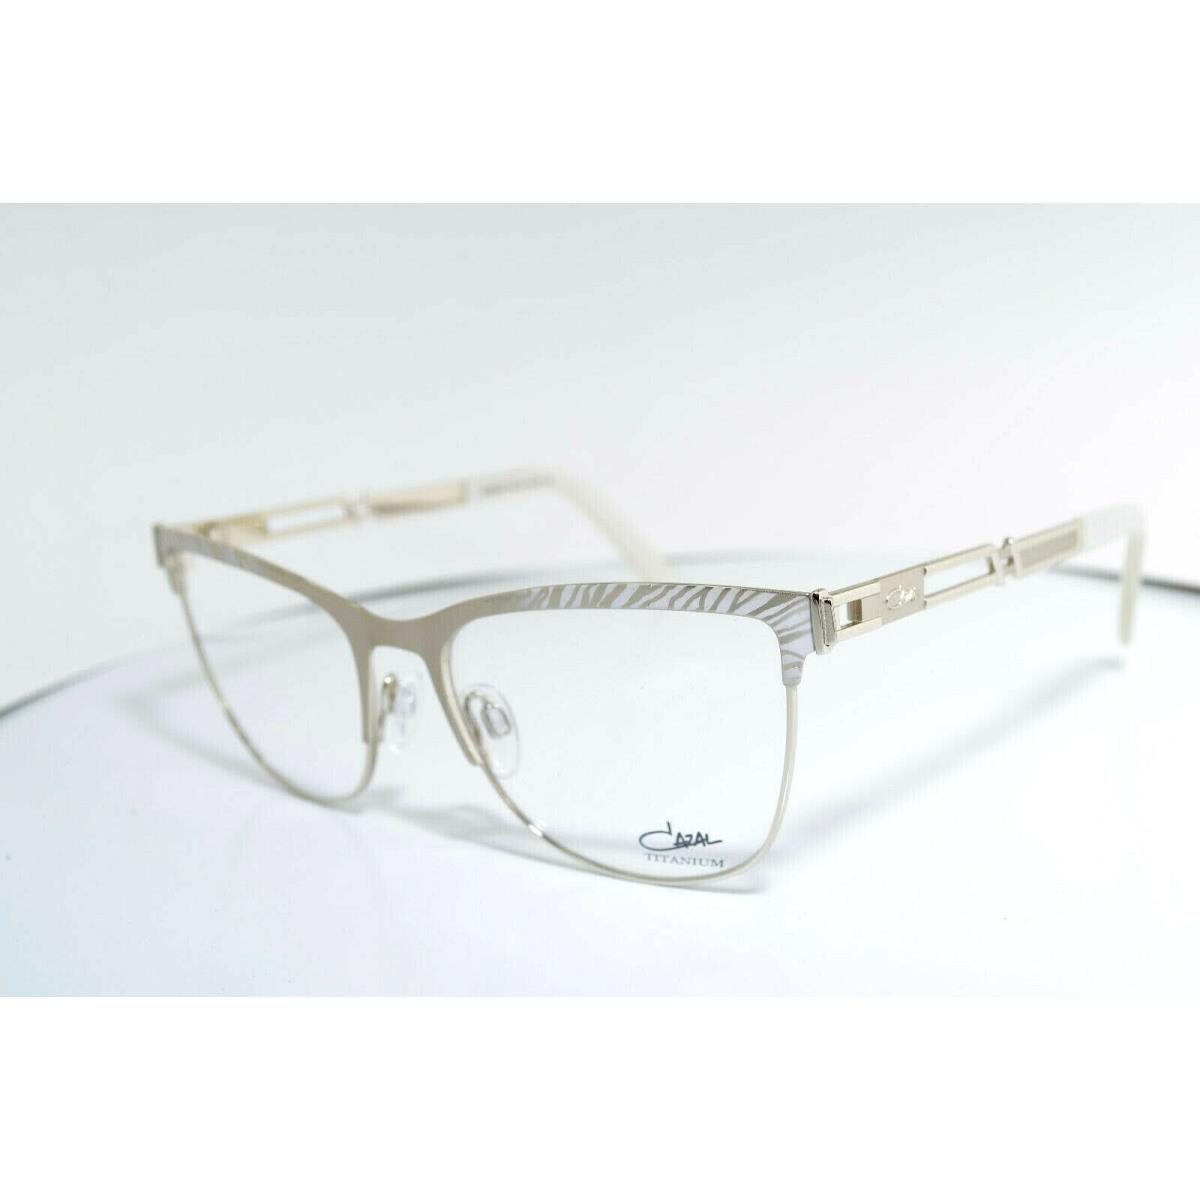 Cazal 4257 C001 Eyeglasses Frame